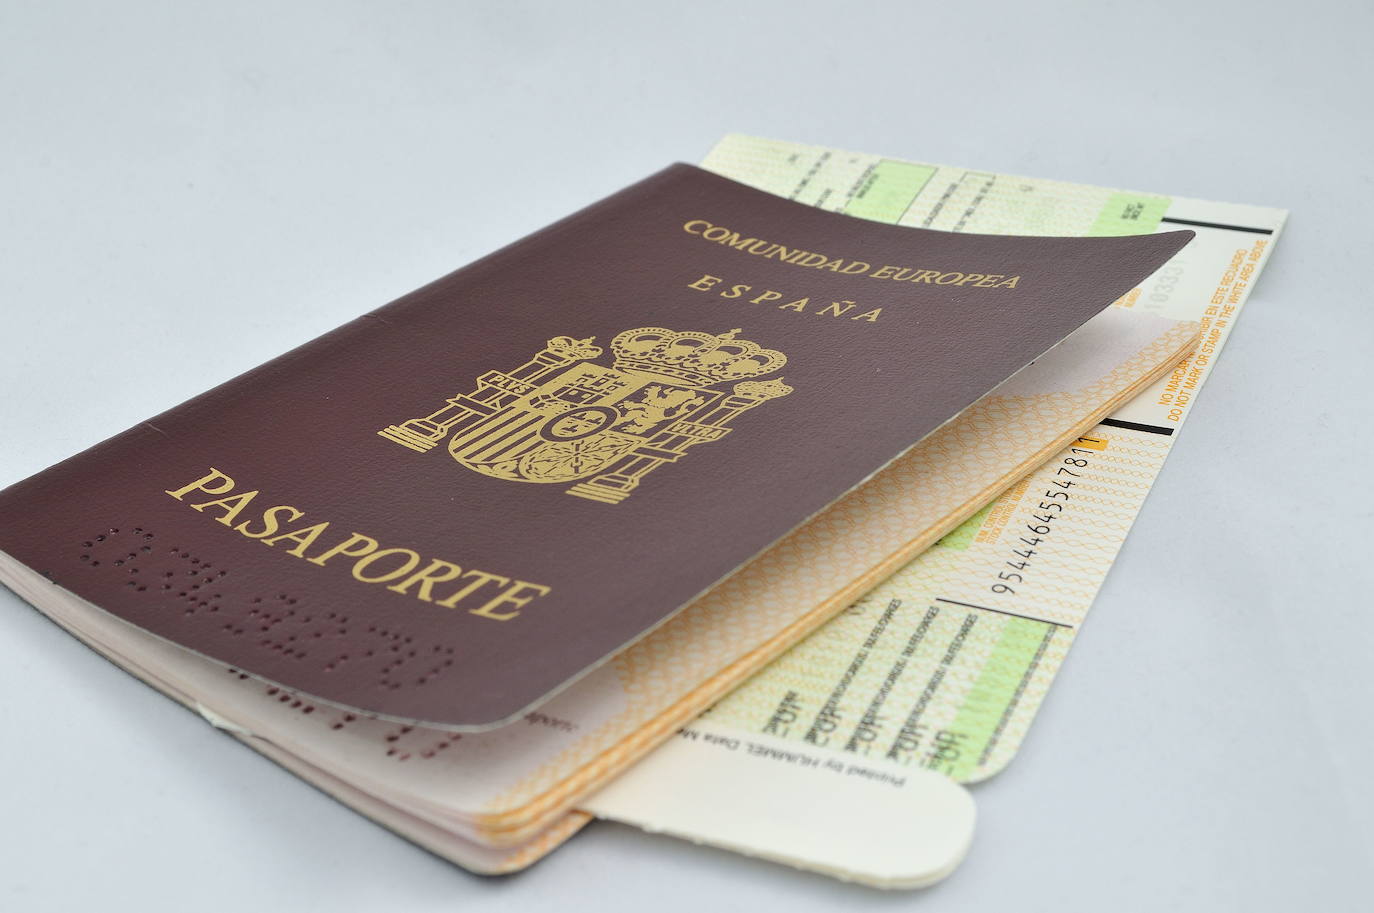 Spanish passport and a boarding pass.